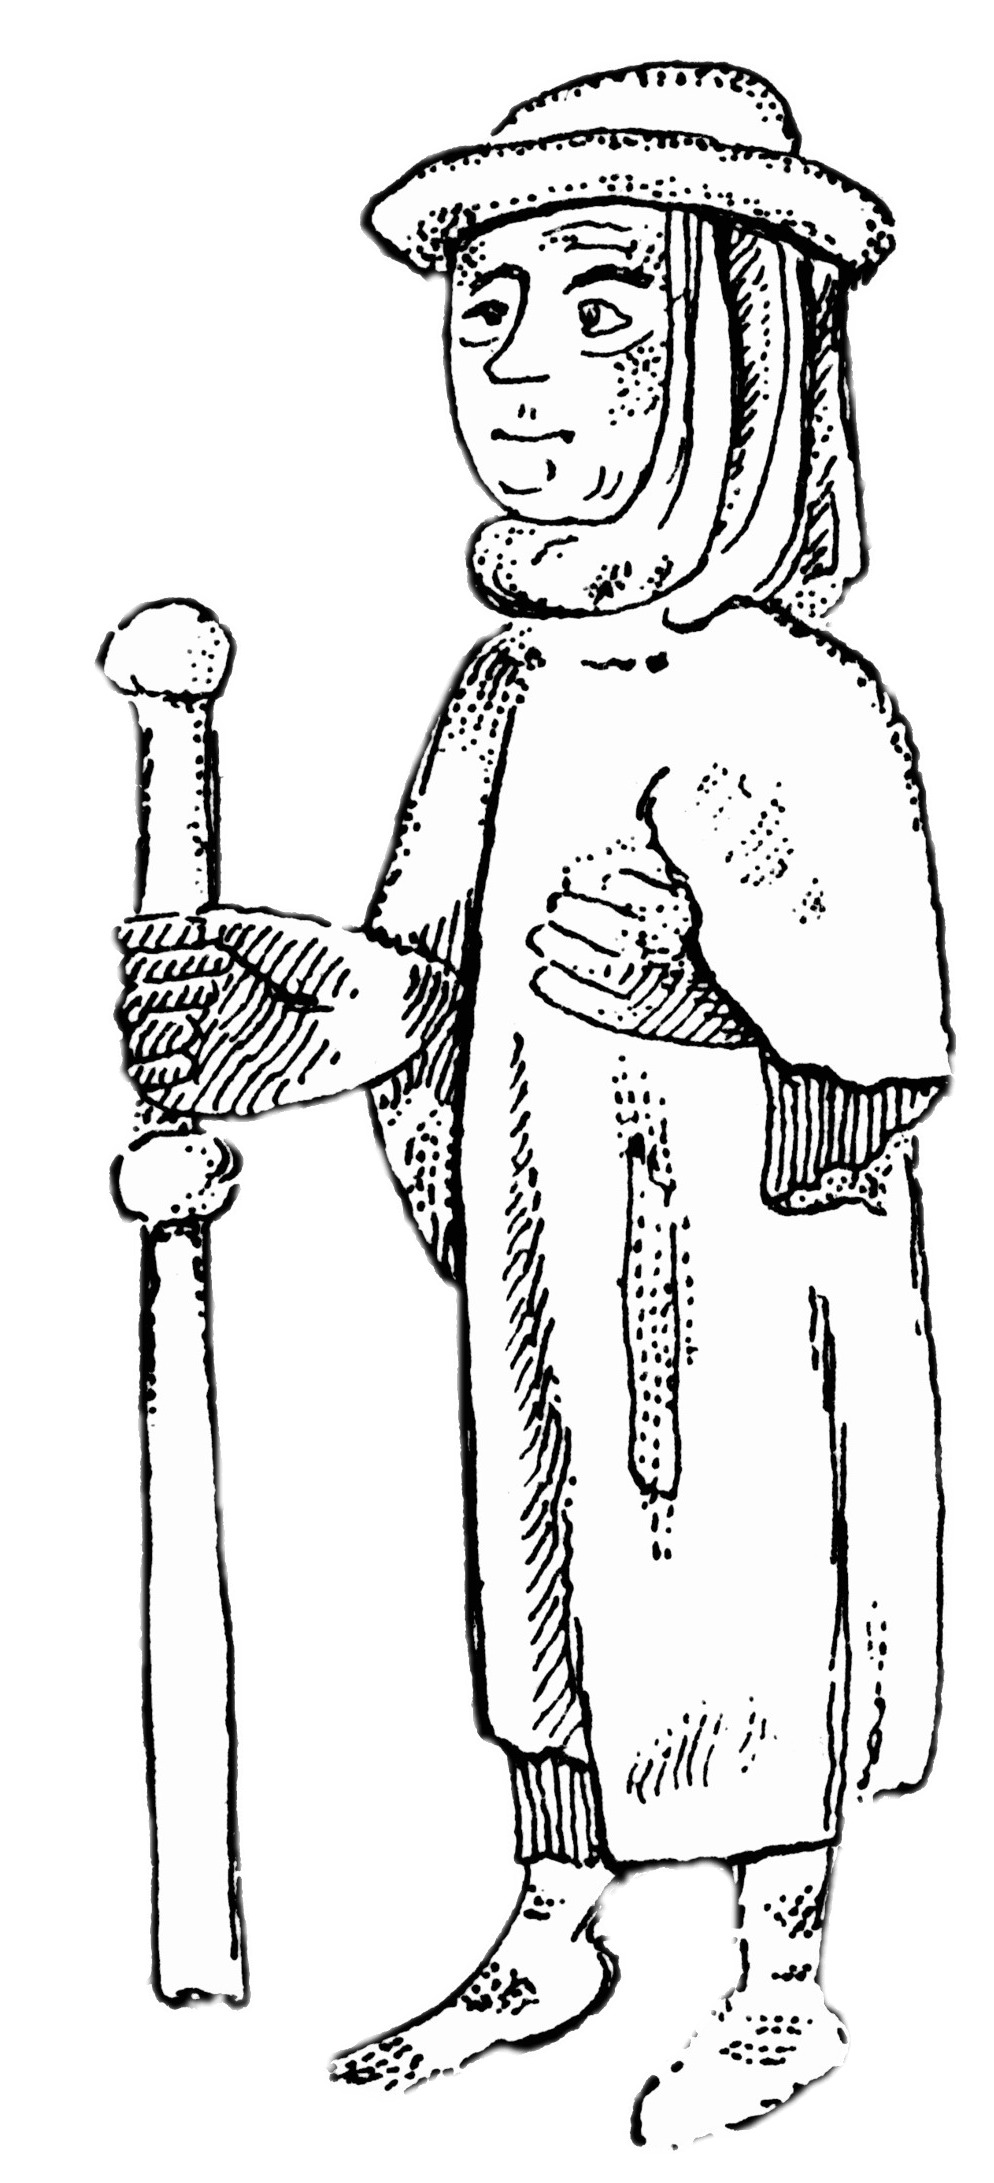 Pilgrim Black and White Illustration icons